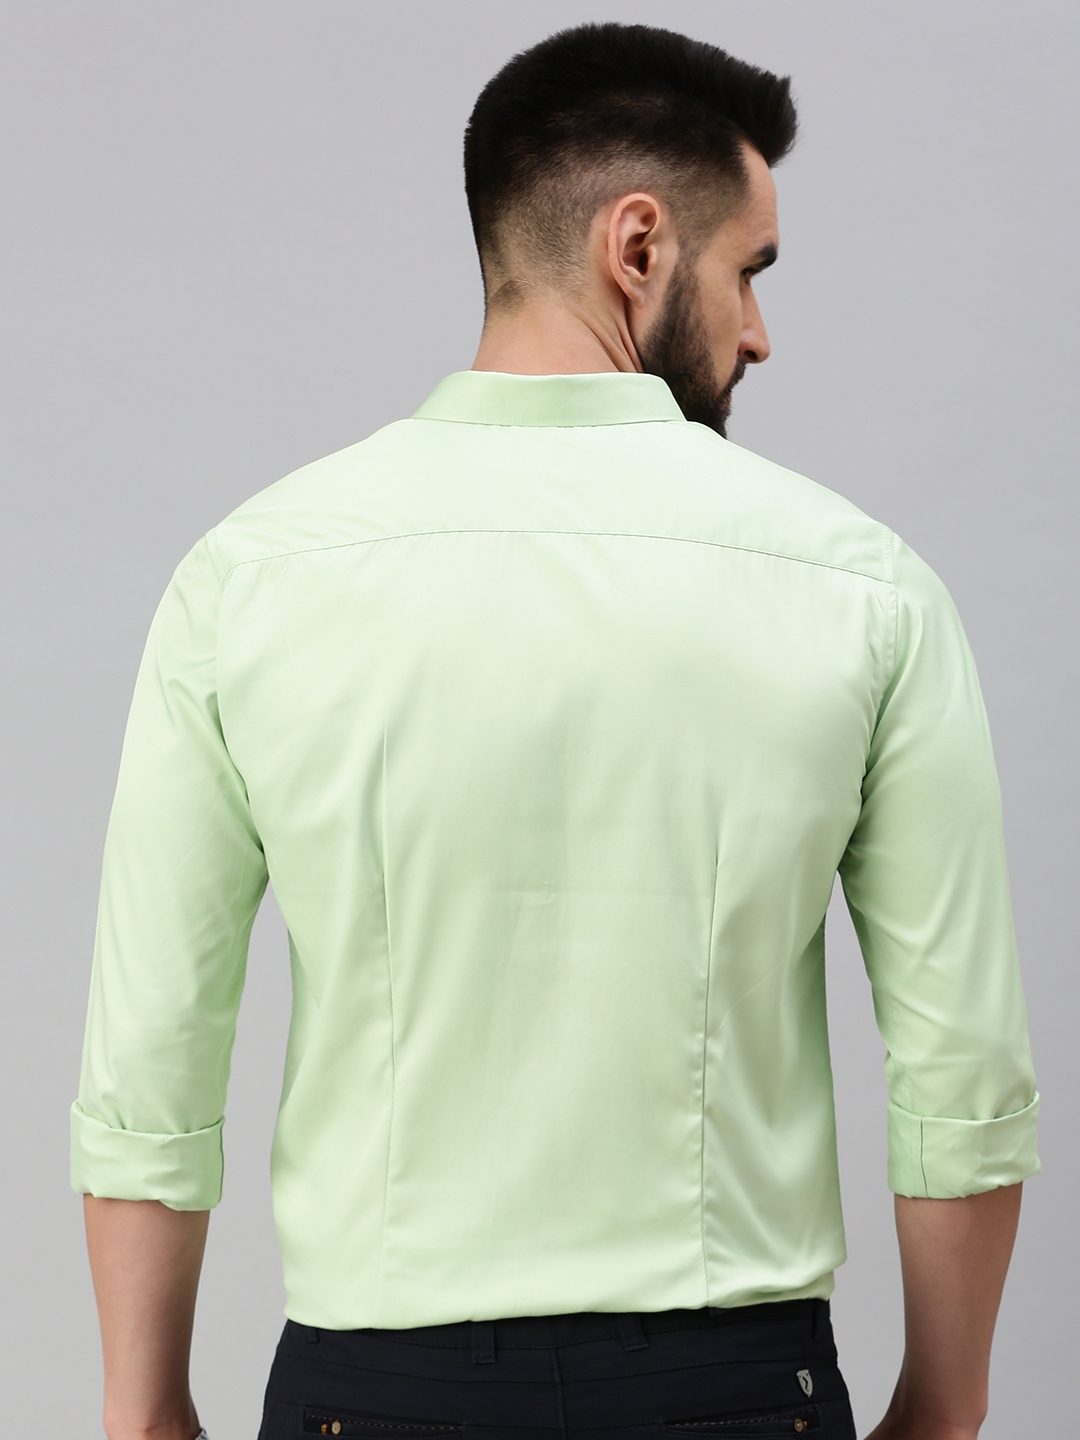 Men's Green Satin Solid Casual Shirts